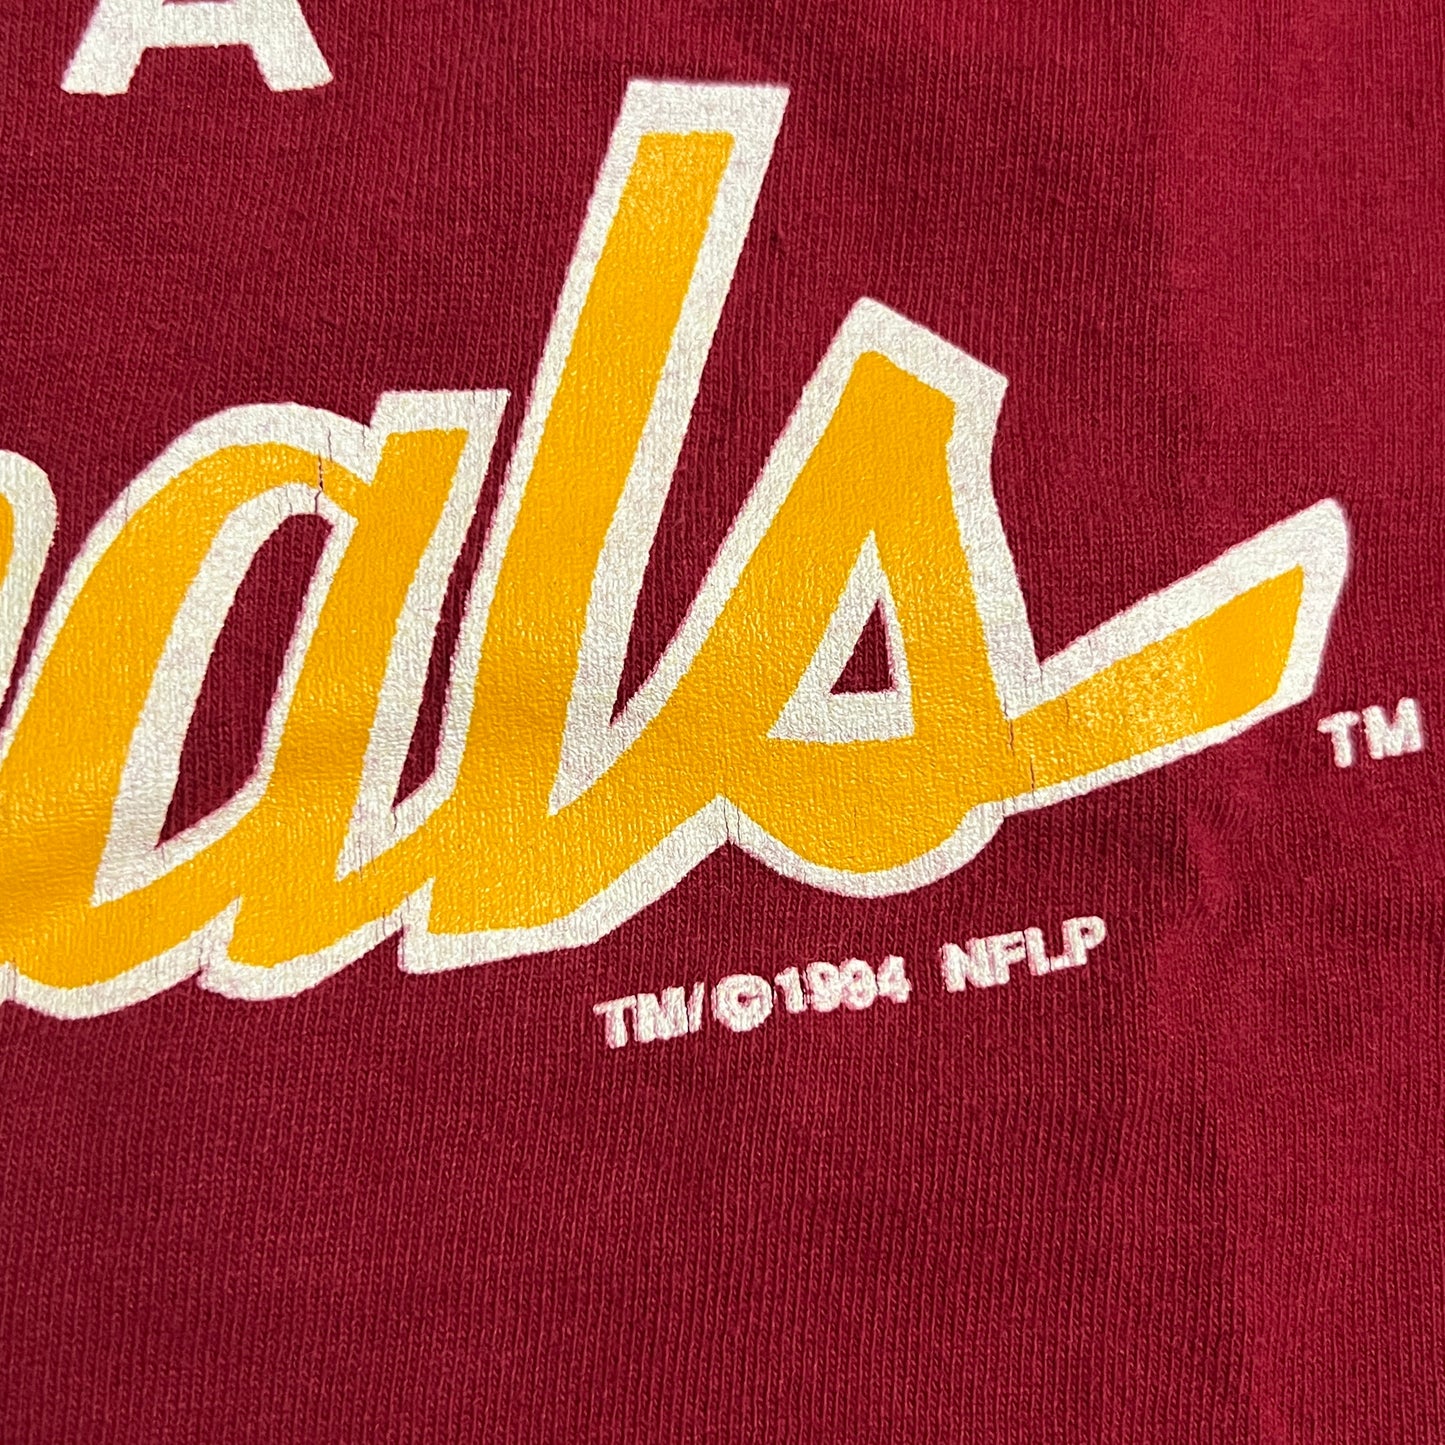 Arizona Cardinals 1994 Vintage Team Logo Shirt - L